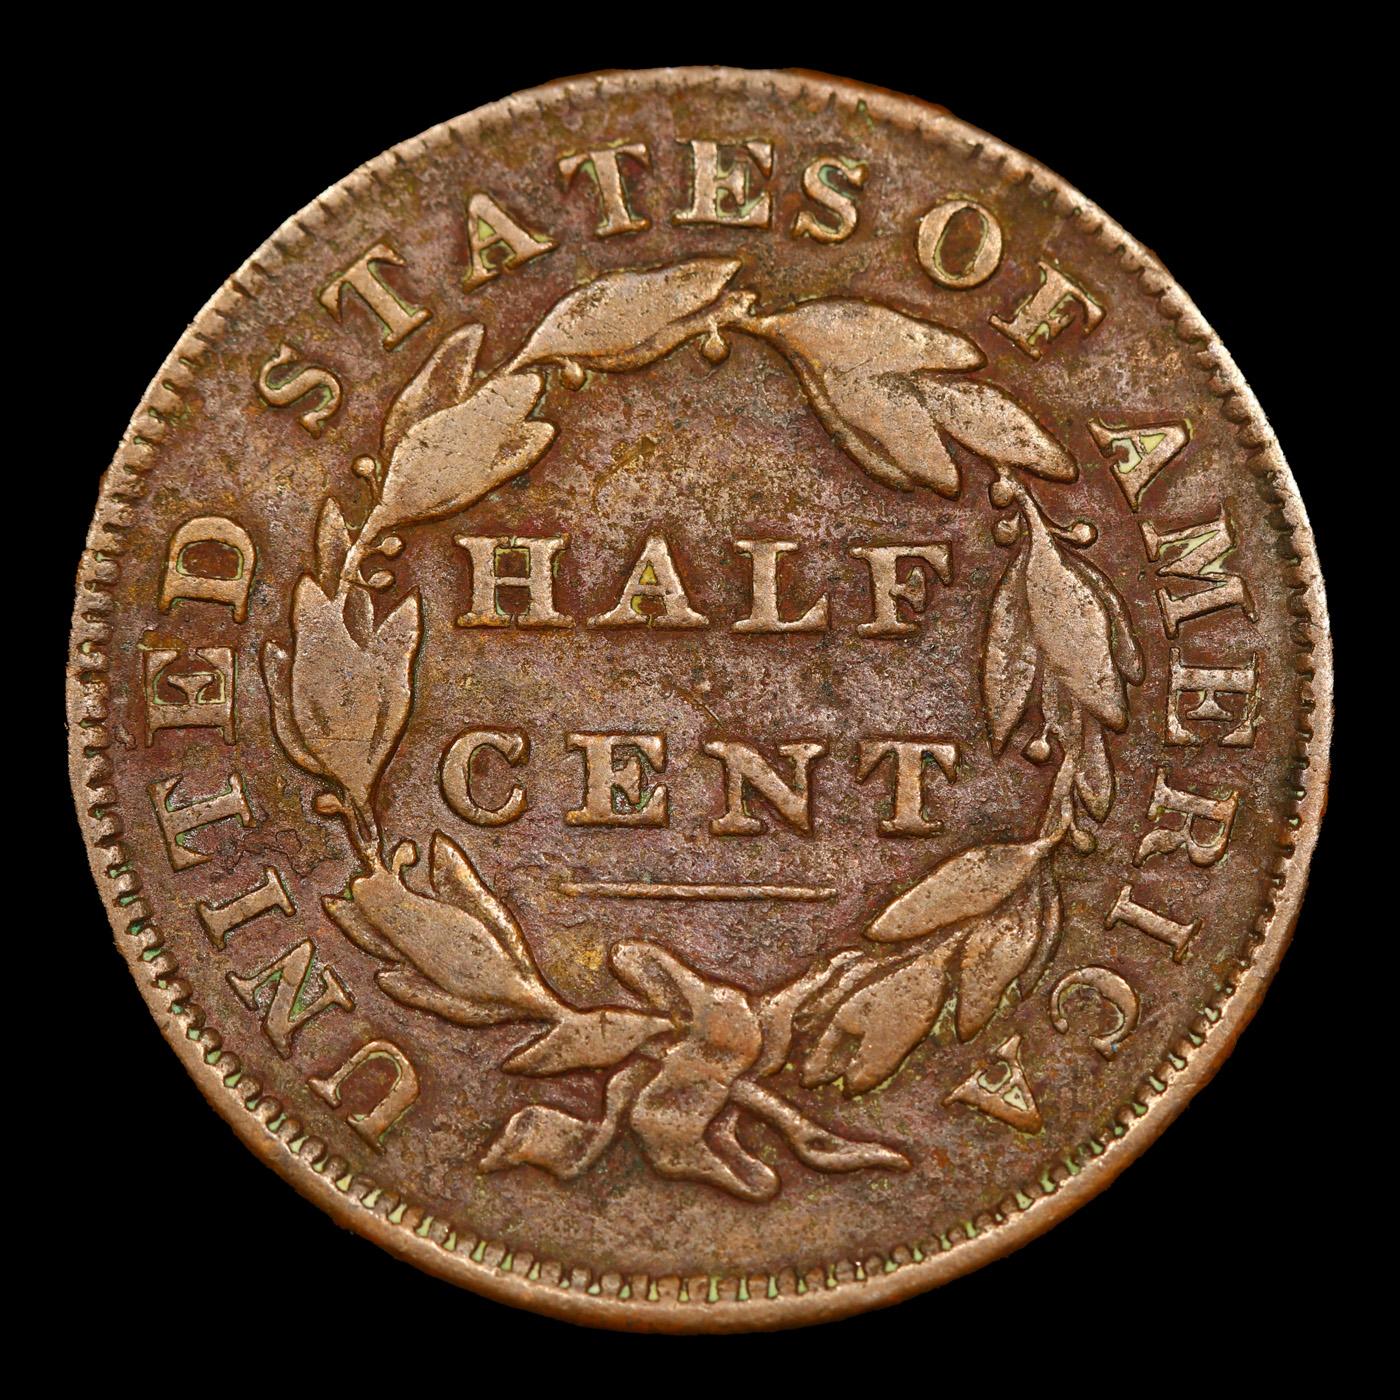 1832 Classic Head half cent 1/2c Grades vf++